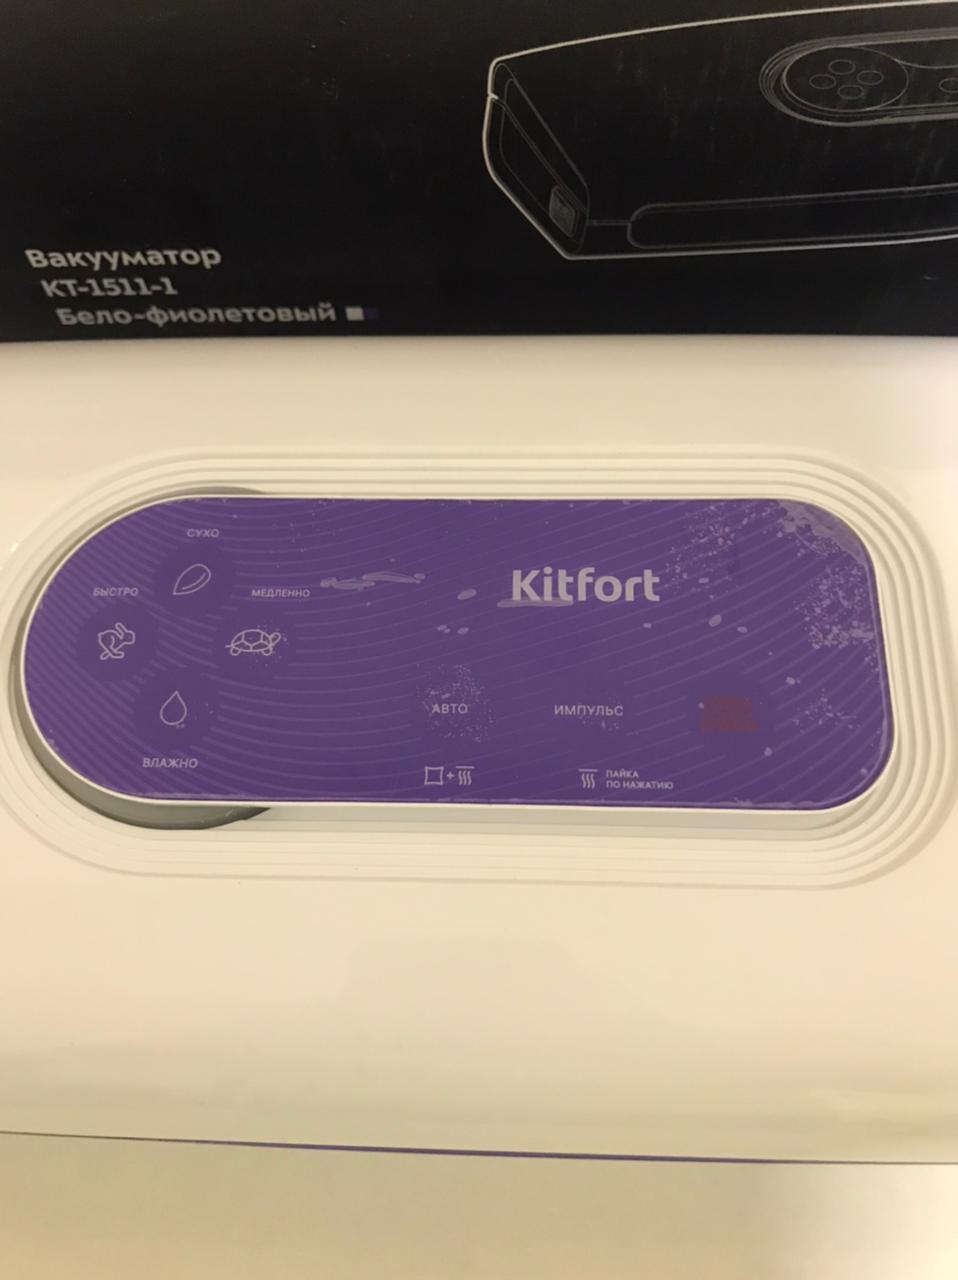  KitFort -1511-1 (-) (5)